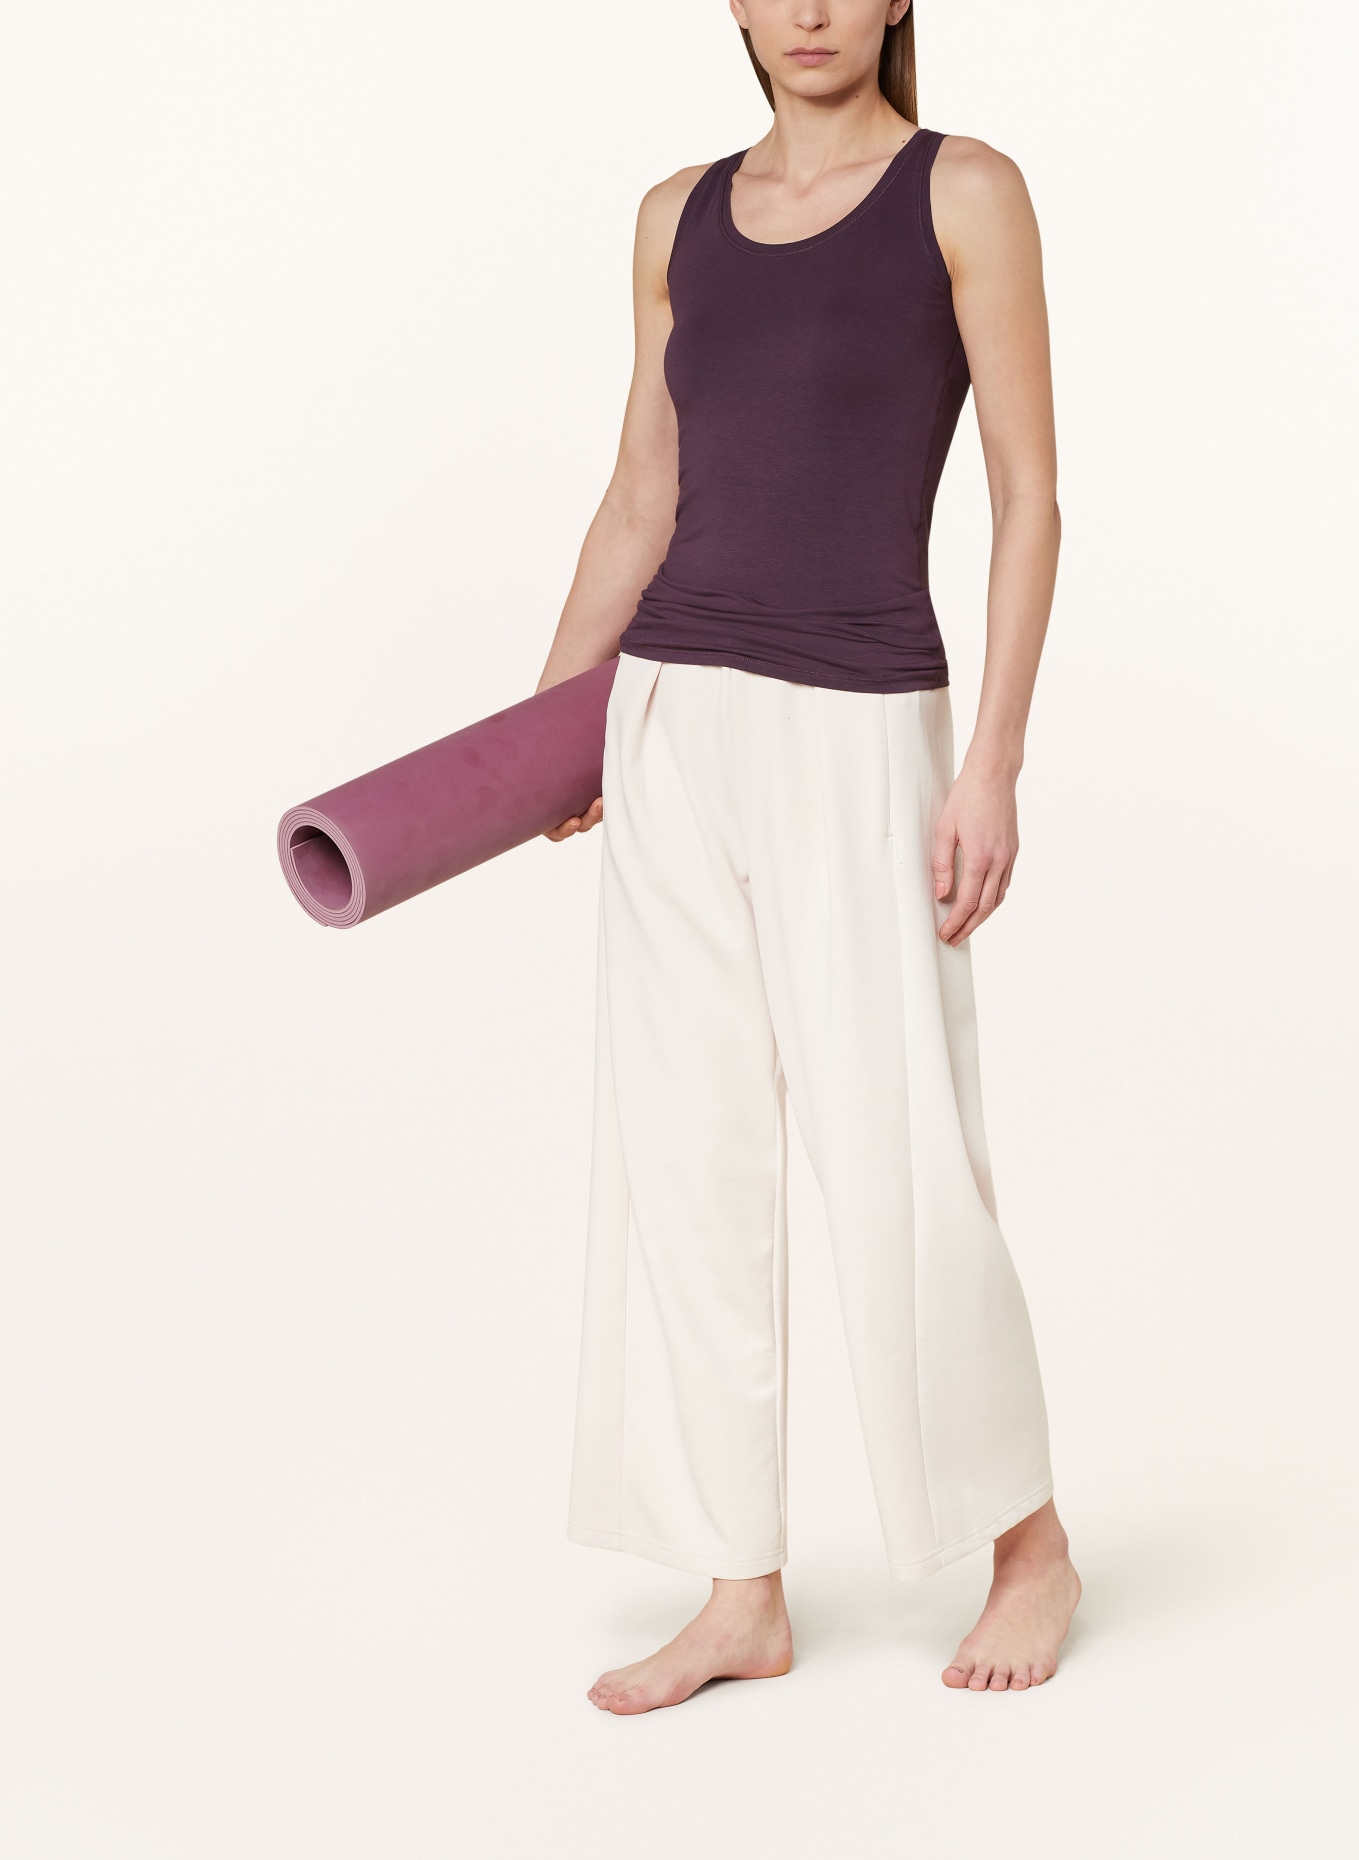 MANDALA Yoga top LUXE, Color: DARK PURPLE (Image 2)